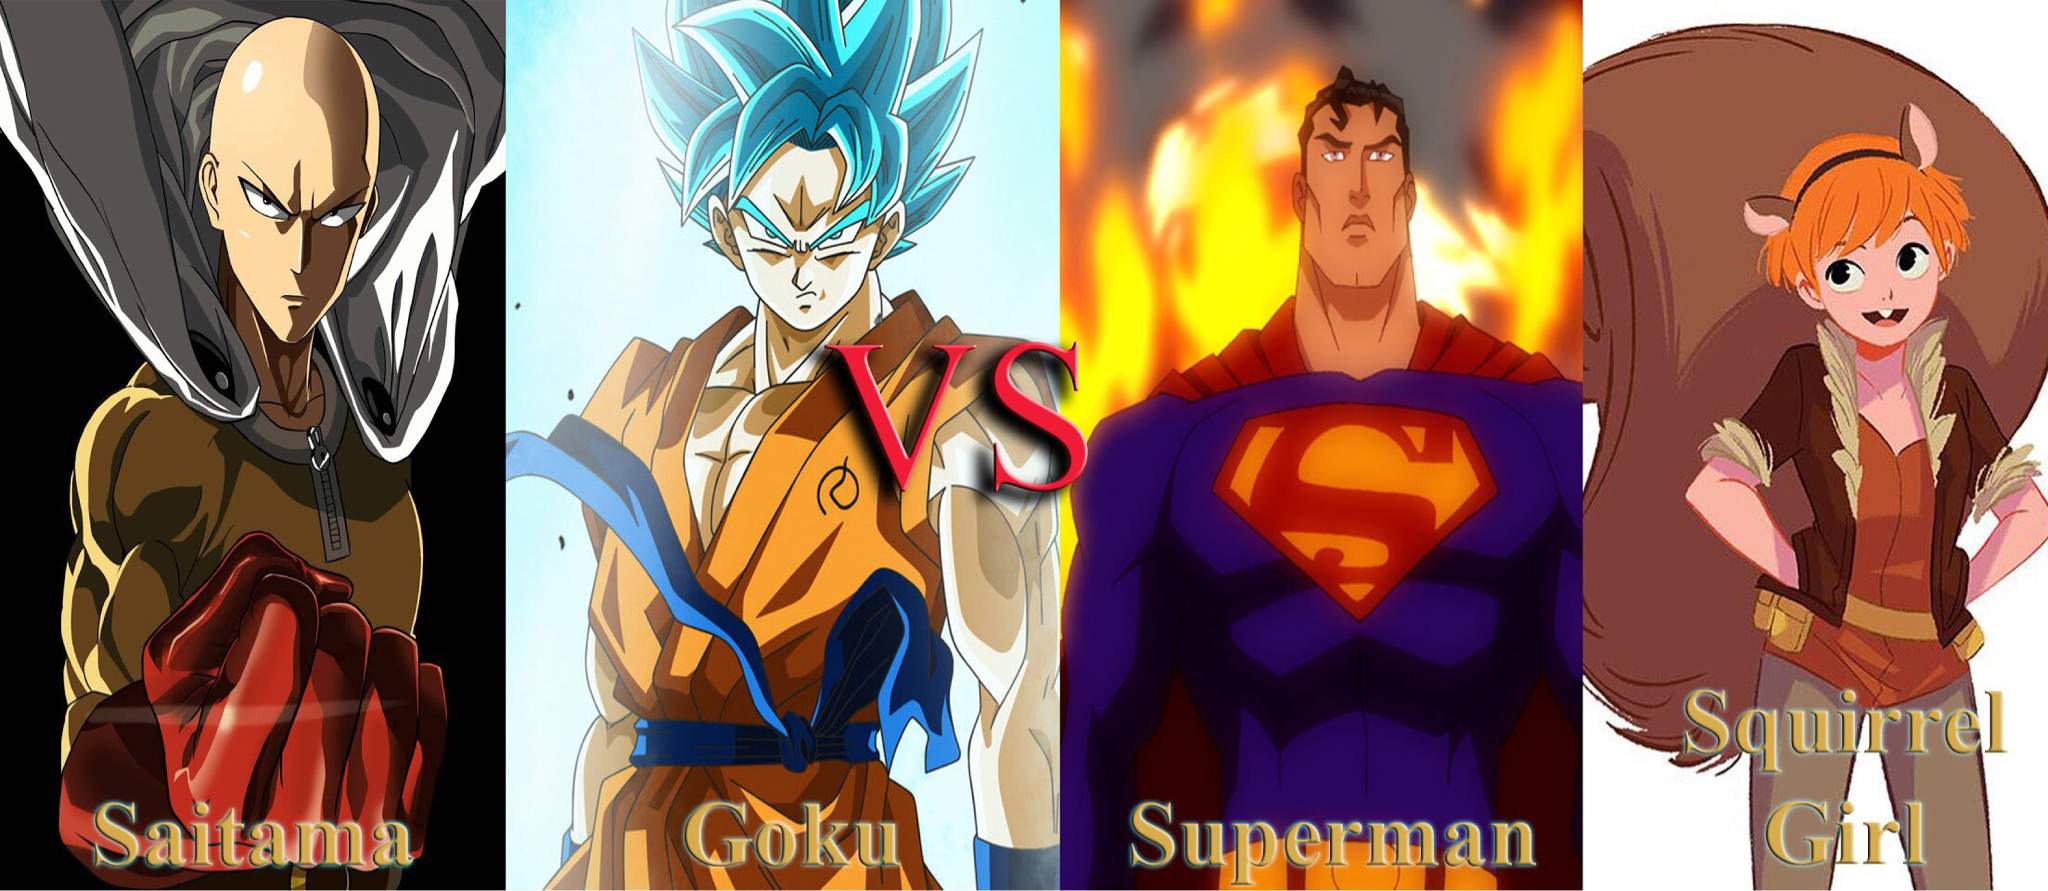 BONUS BATTLE: Saitama VS Goku VS Superman VS Squirrel Girl Battle Arena Ami...